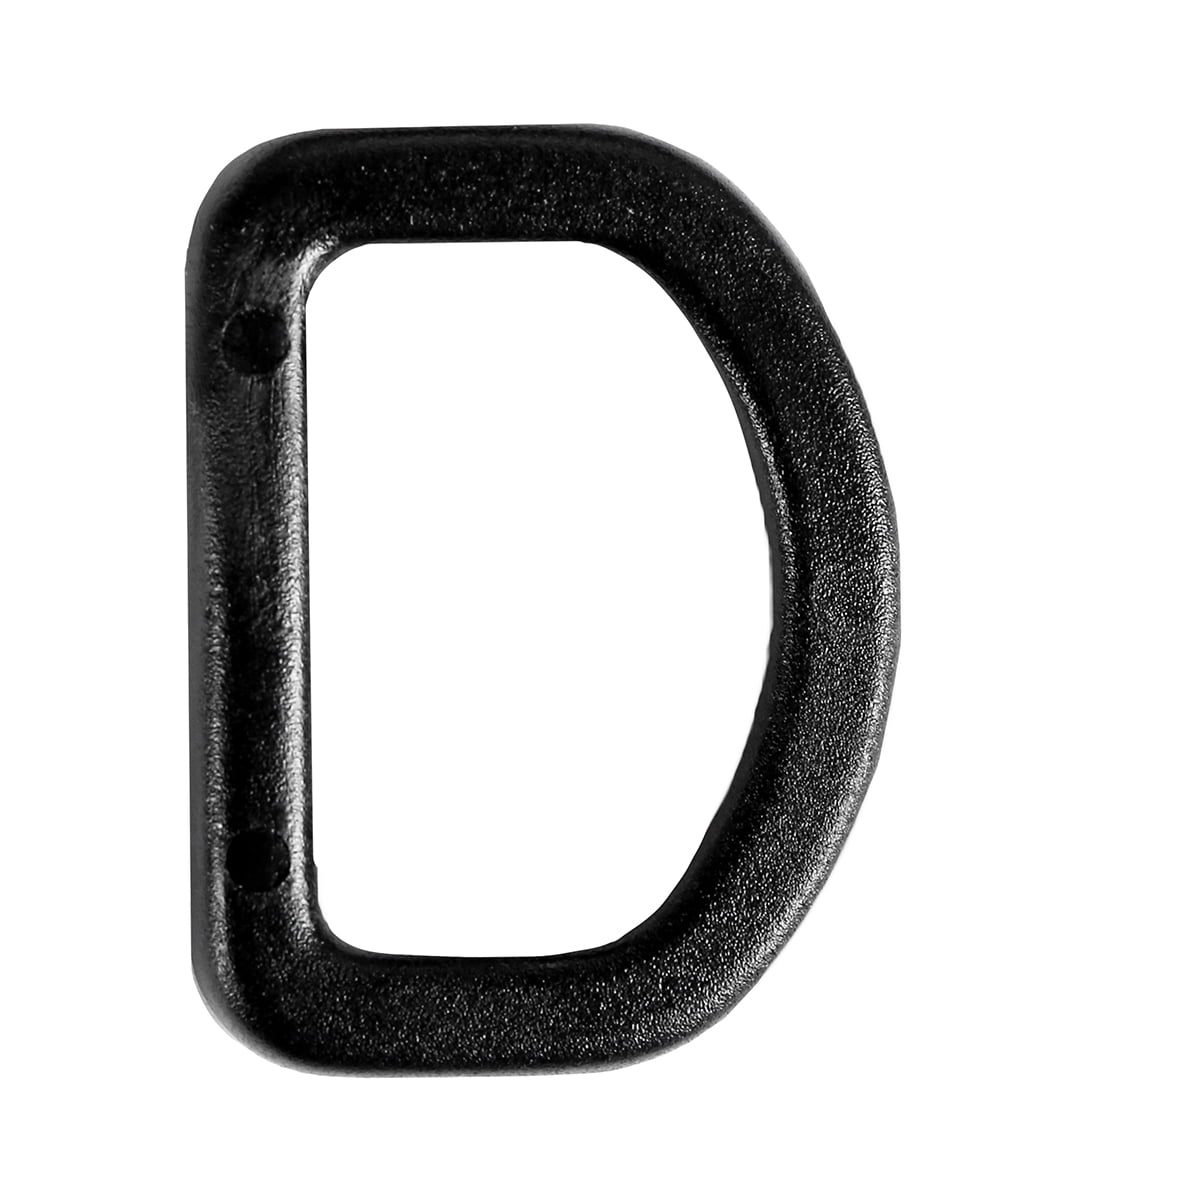 Strapworks 1 Inch Plastic D-Ring Buckles, Black, 25 Pack 